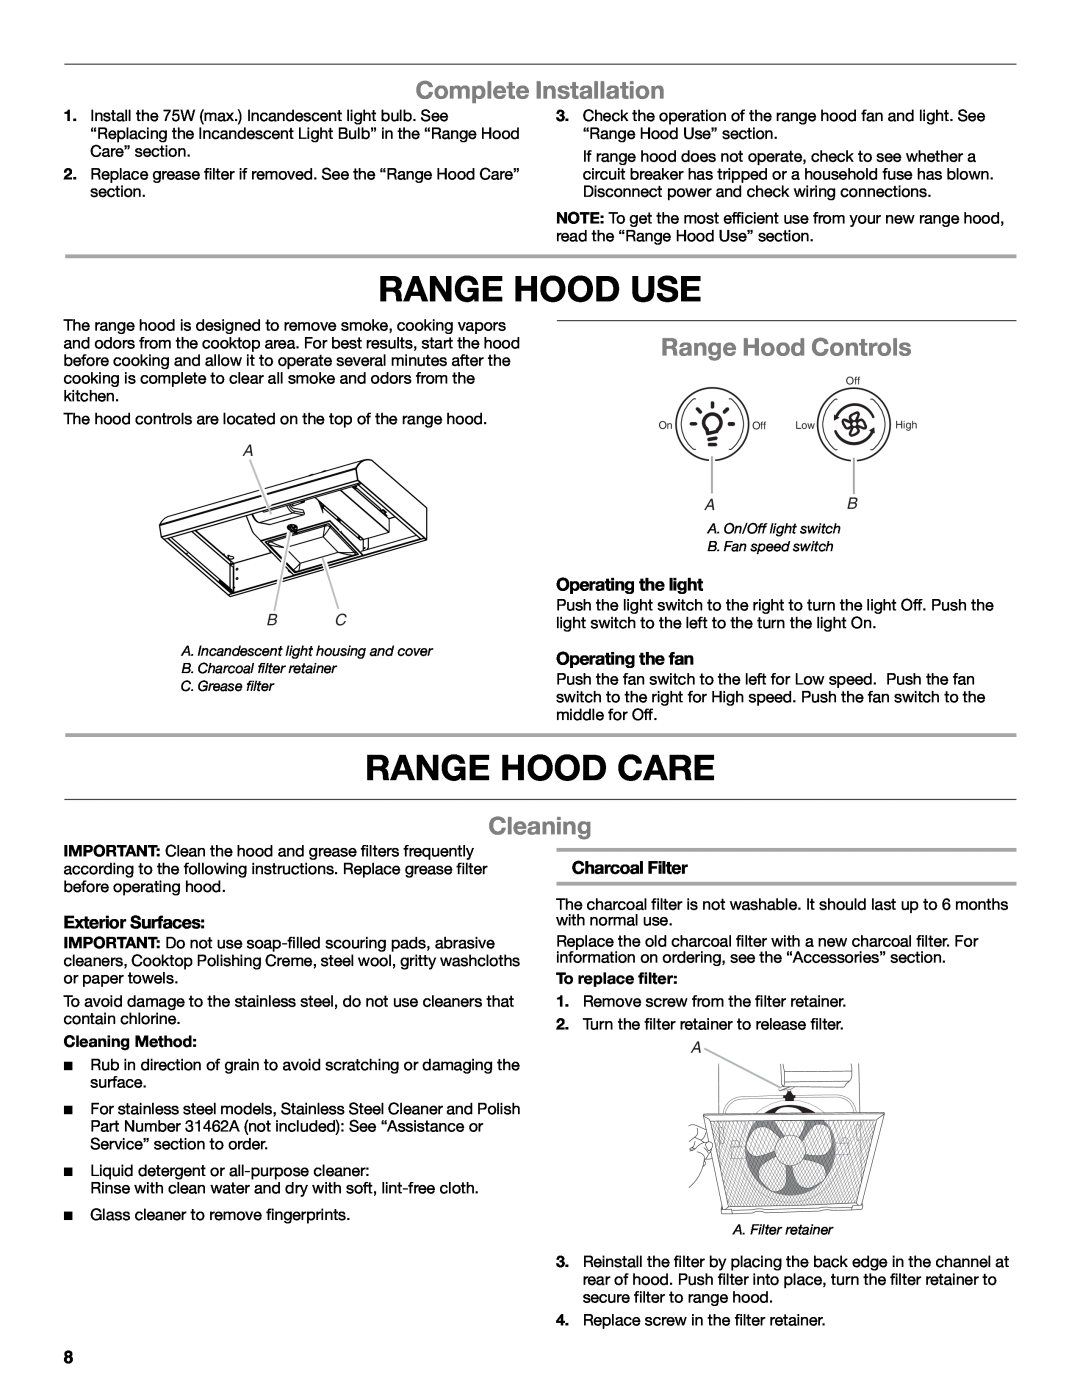 Whirlpool UXT4030AY Range Hood Use, Range Hood Care, Complete Installation, Range Hood Controls, Cleaning, Charcoal Filter 